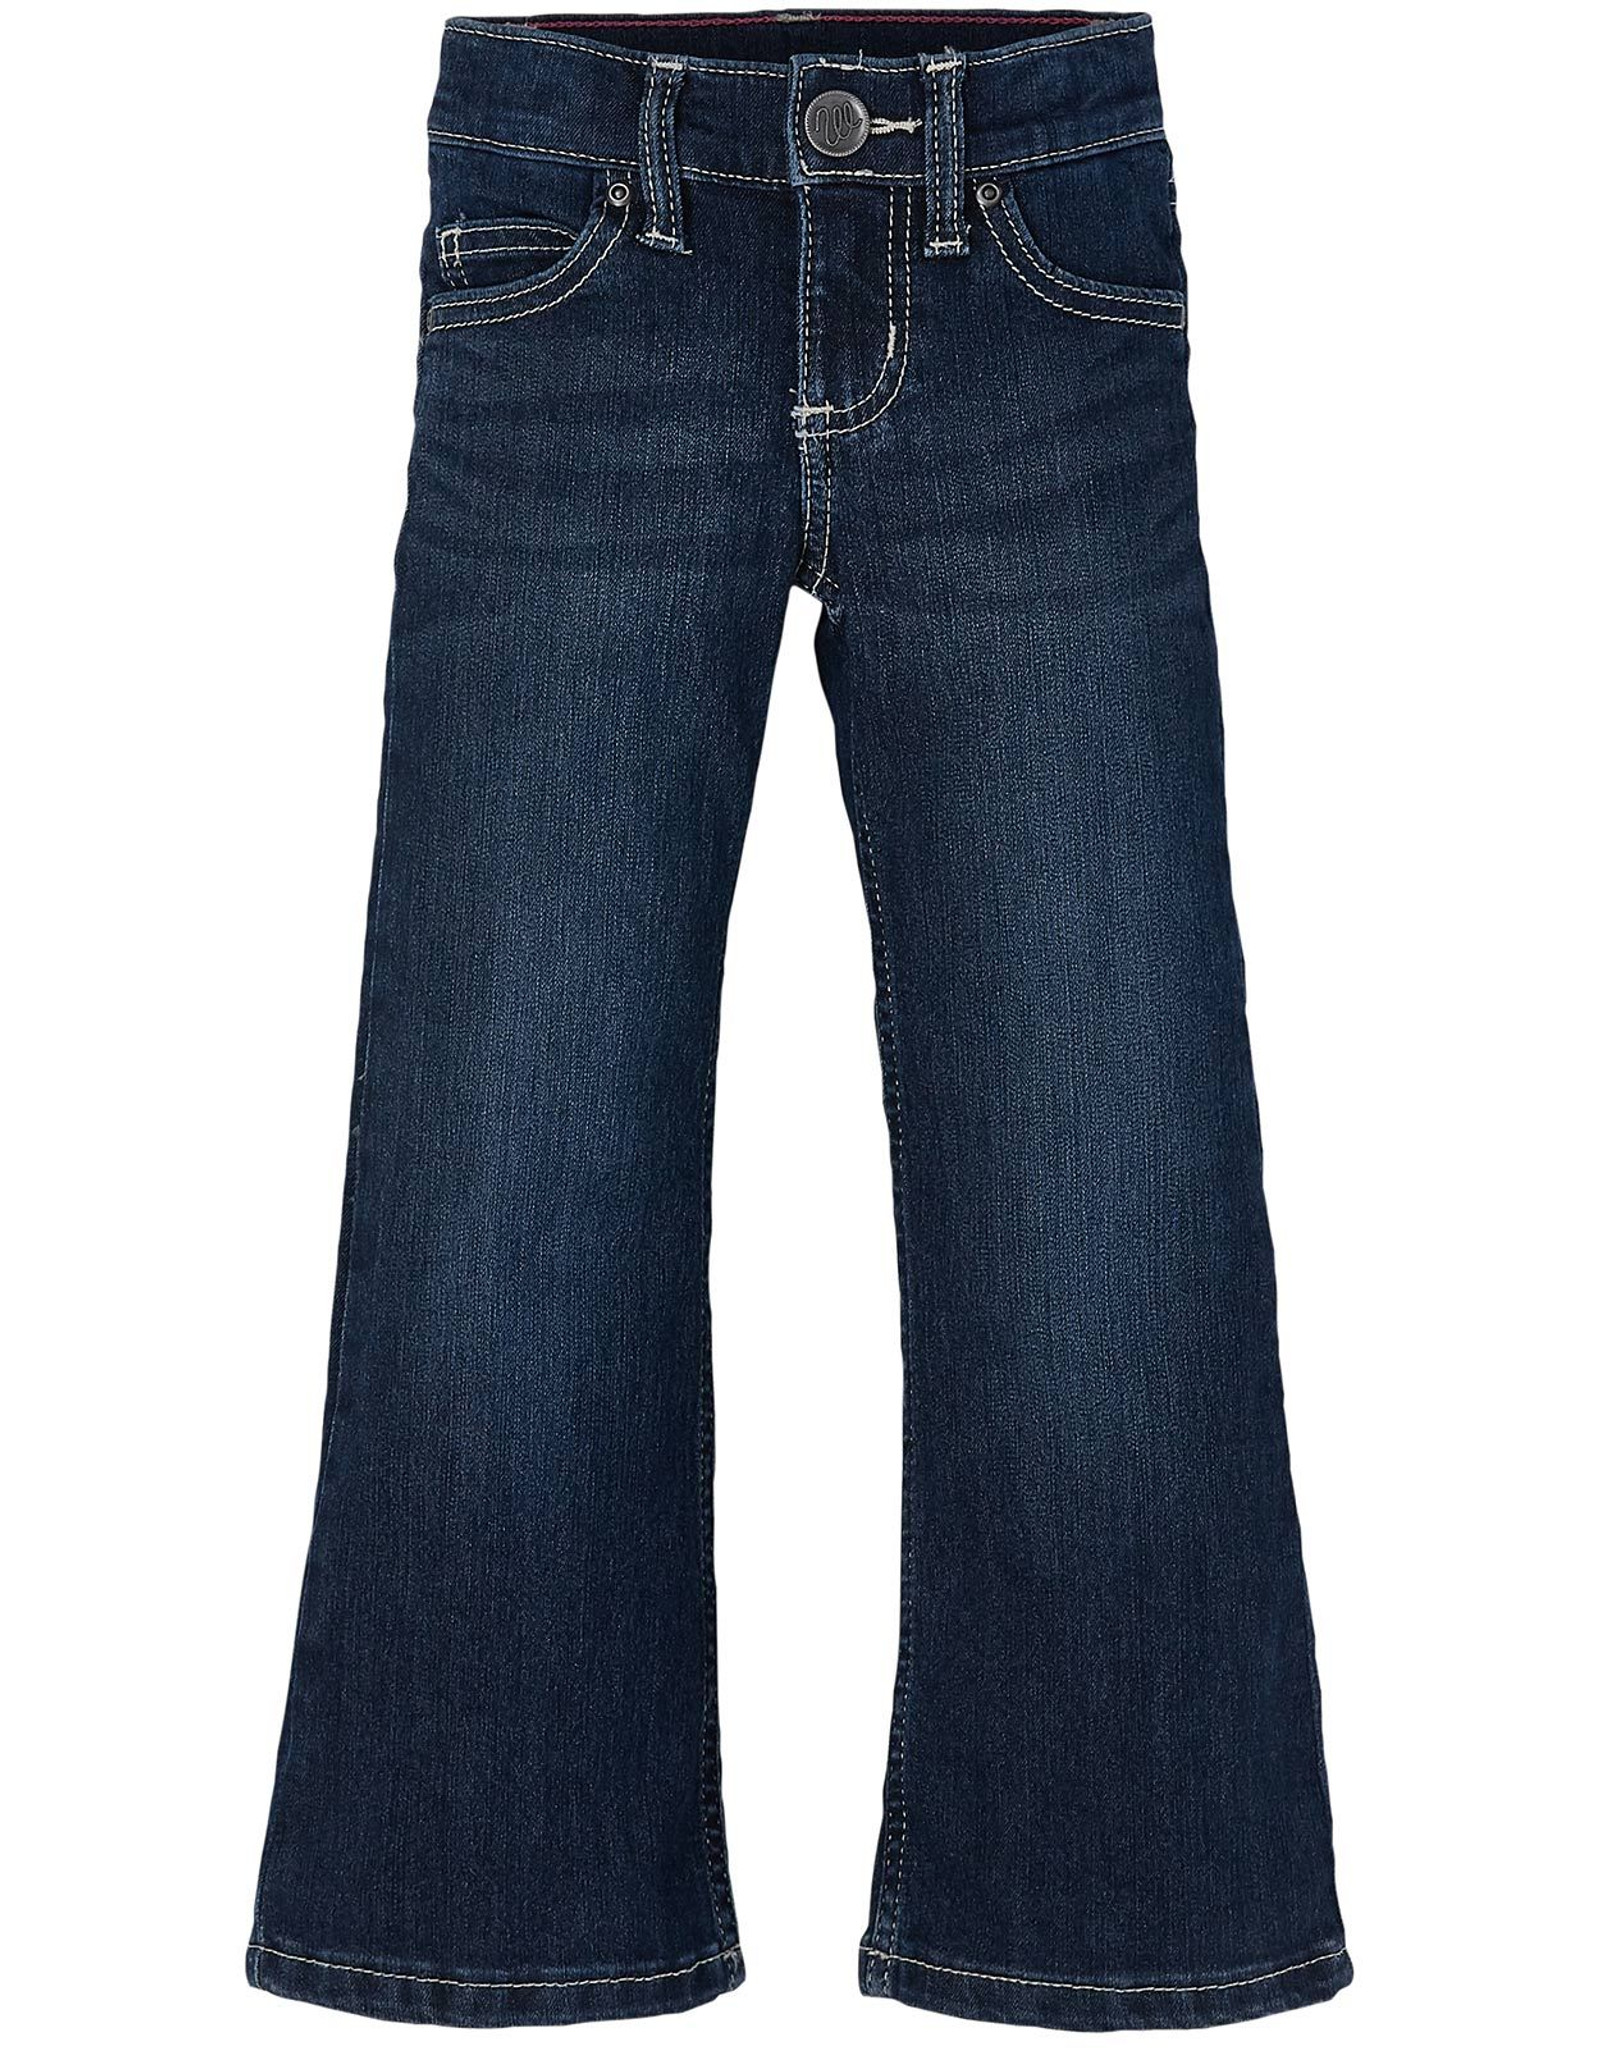 Wrangler Women's Q-Baby Stretch Mid Rise Regular Fit Boot Cut Jeans - Dark  Dynasty